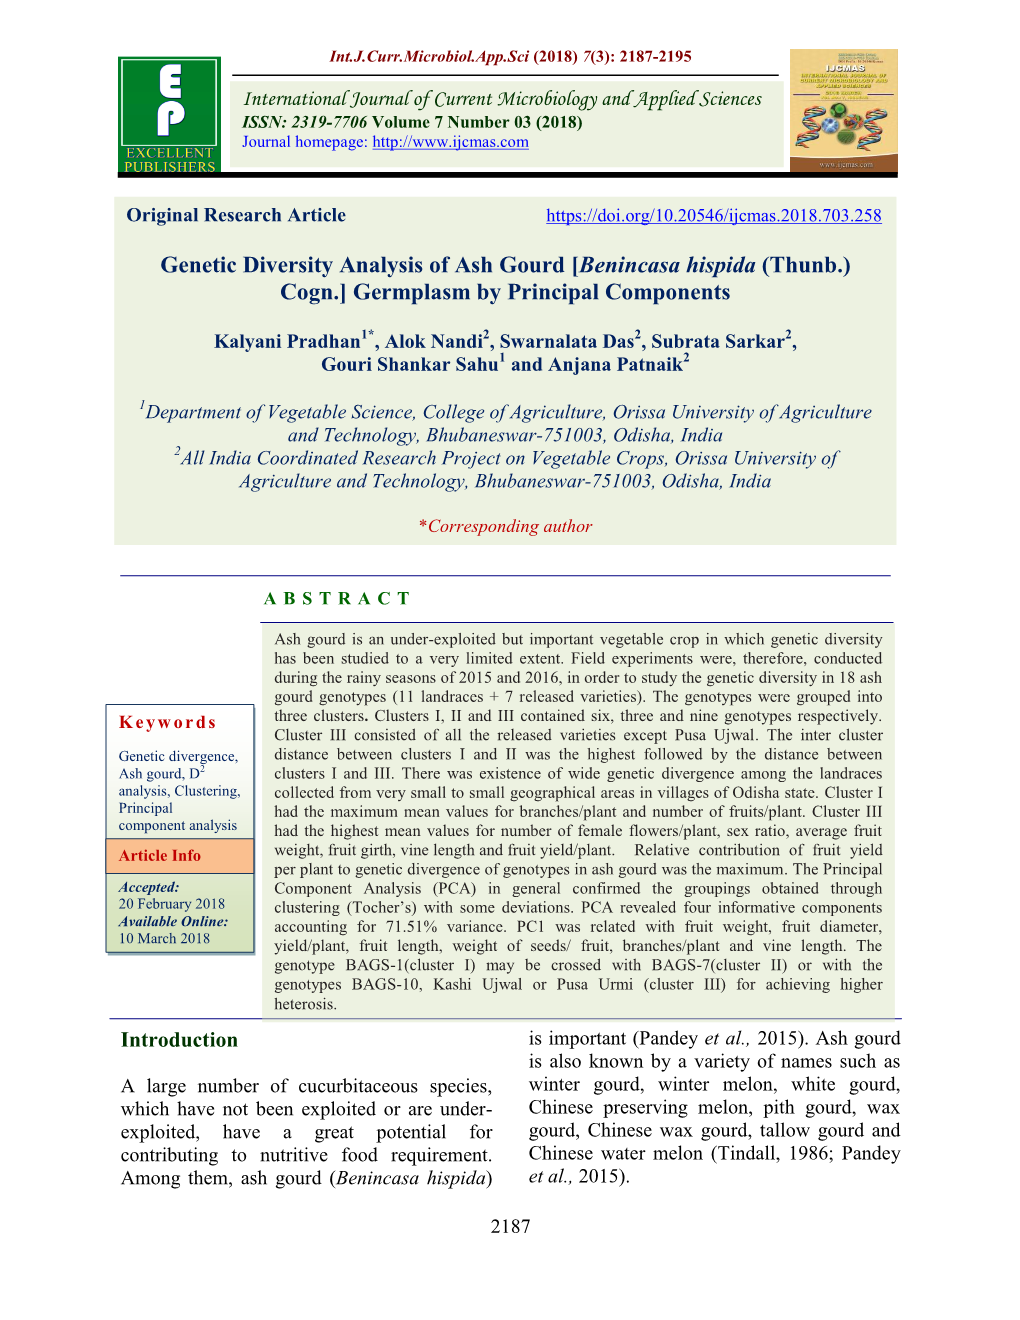 Genetic Diversity Analysis of Ash Gourd [Benincasa Hispida (Thunb.) Cogn.] Germplasm by Principal Components